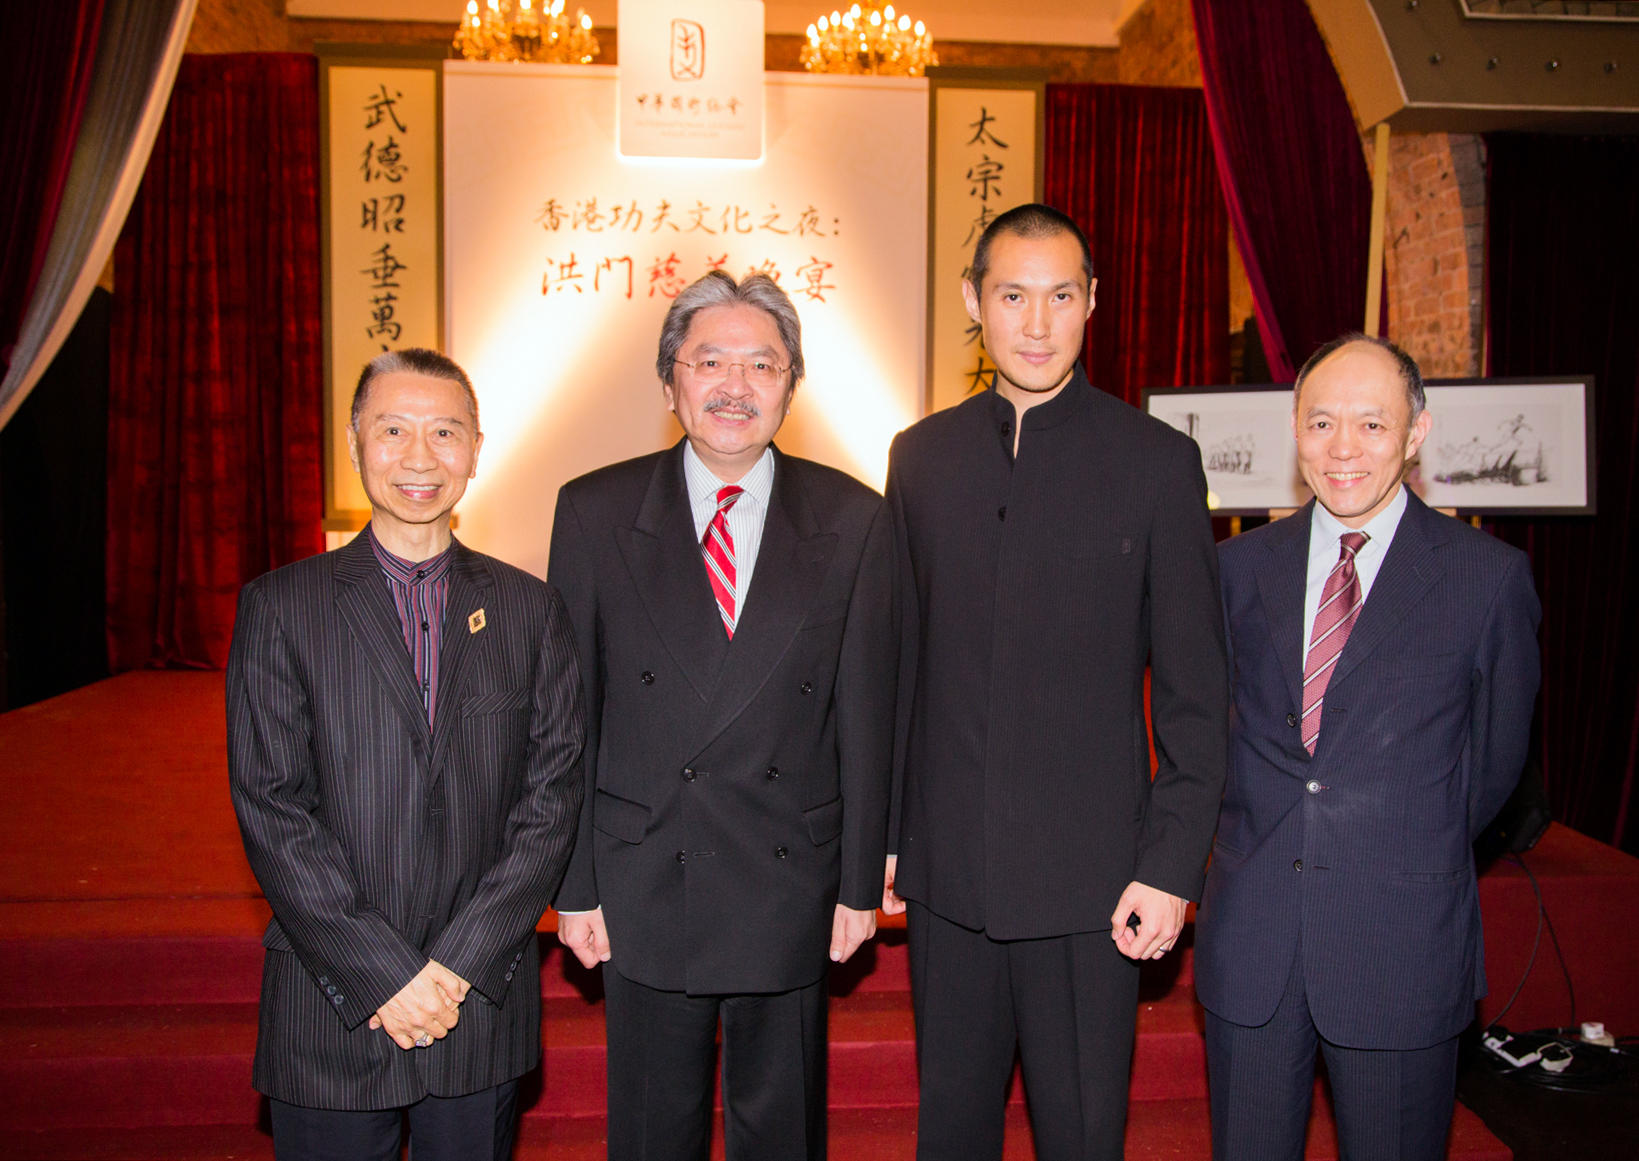 From left: Lam Chun-fai, John Tsang, Hing Chao and Ian Fok.